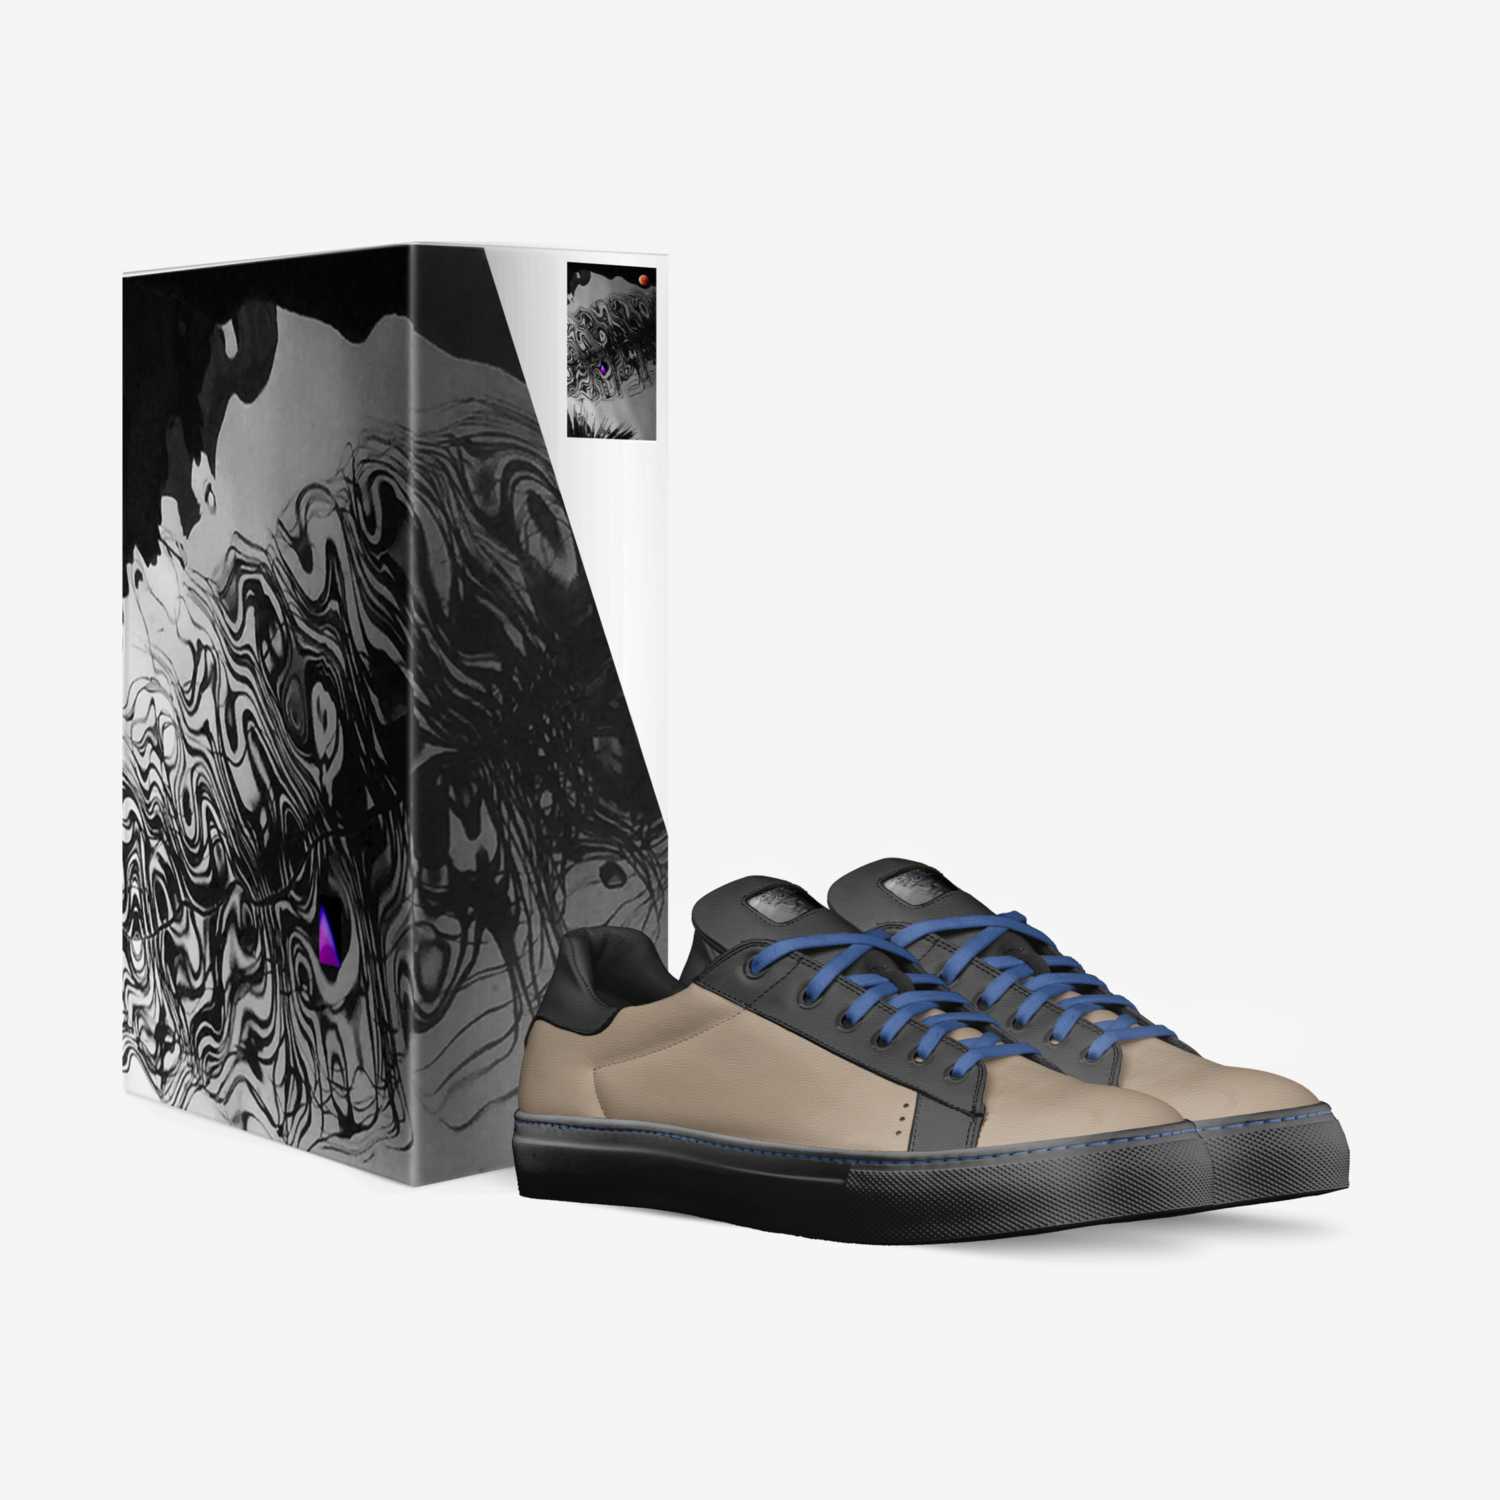 Jamal custom made in Italy shoes by Dan Hurwitz | Box view